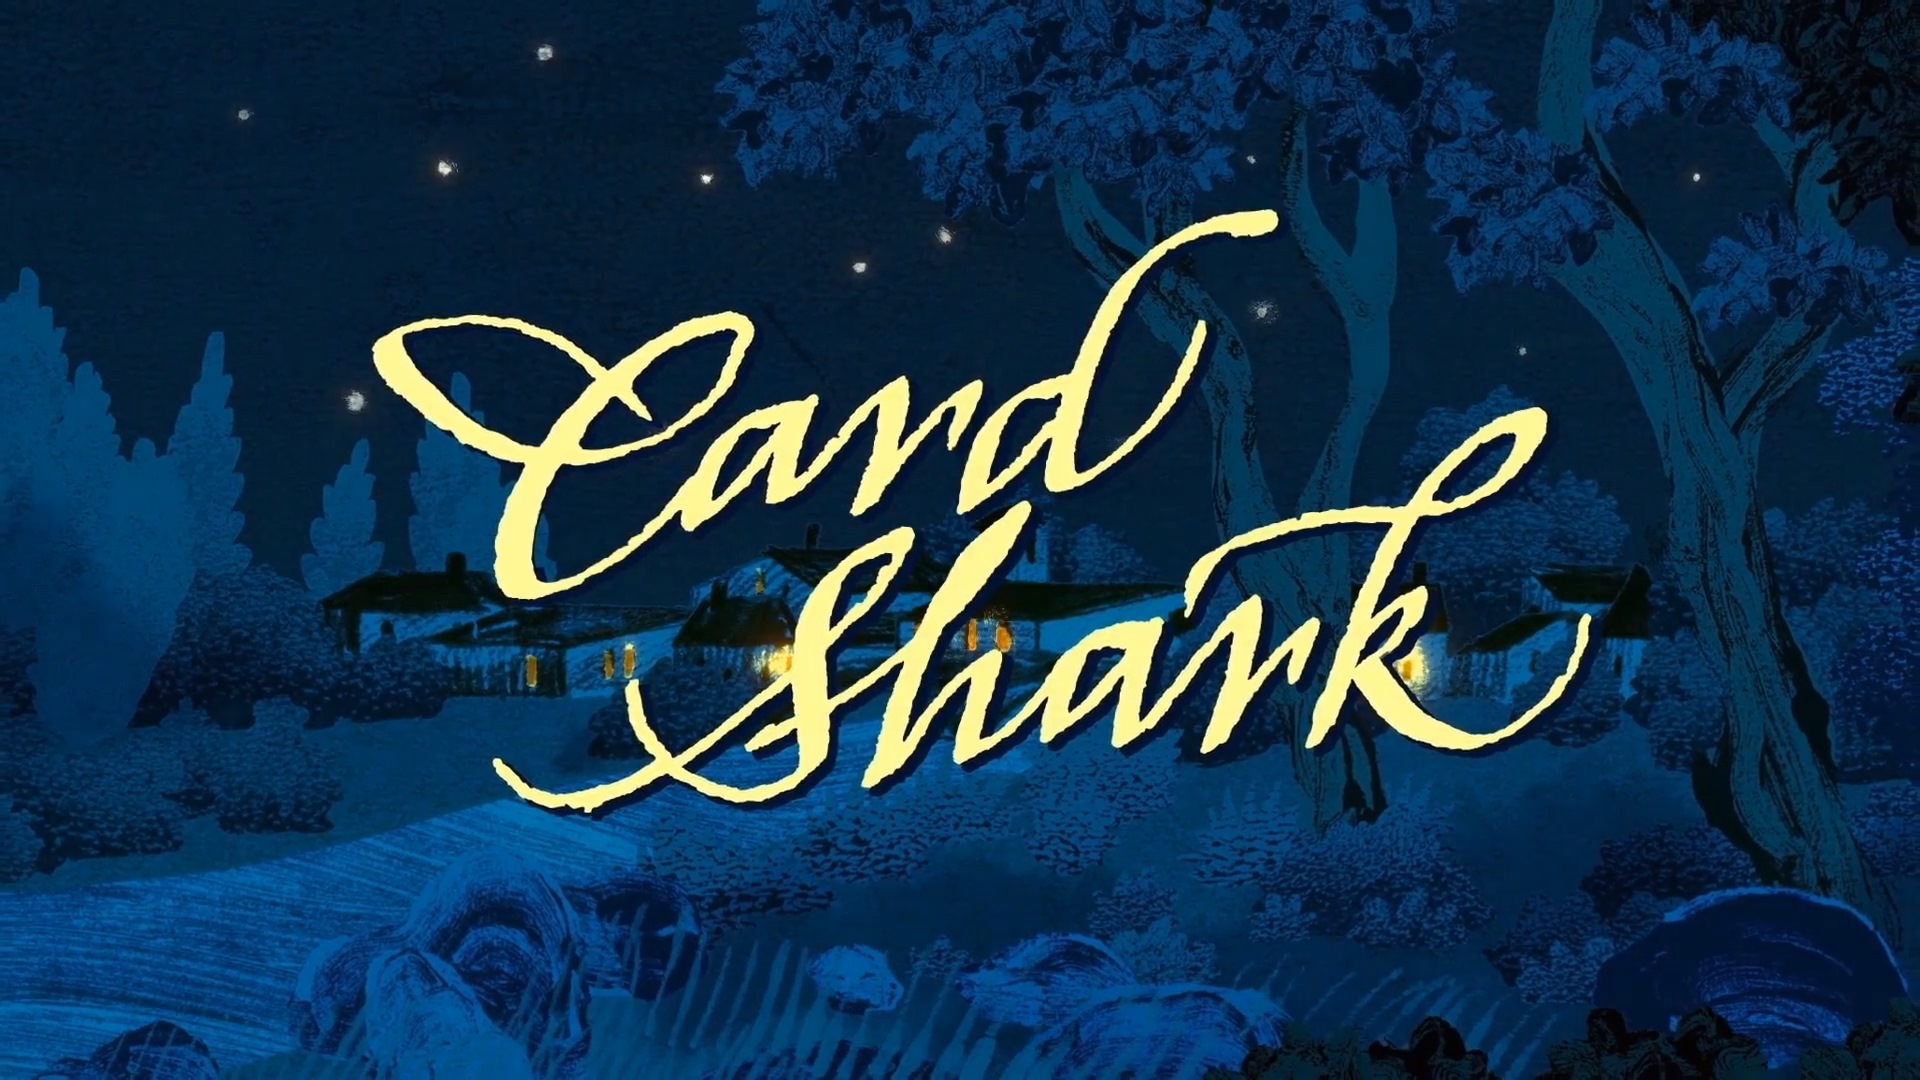 Nerial reveals Card Shark for Nintendo Switch